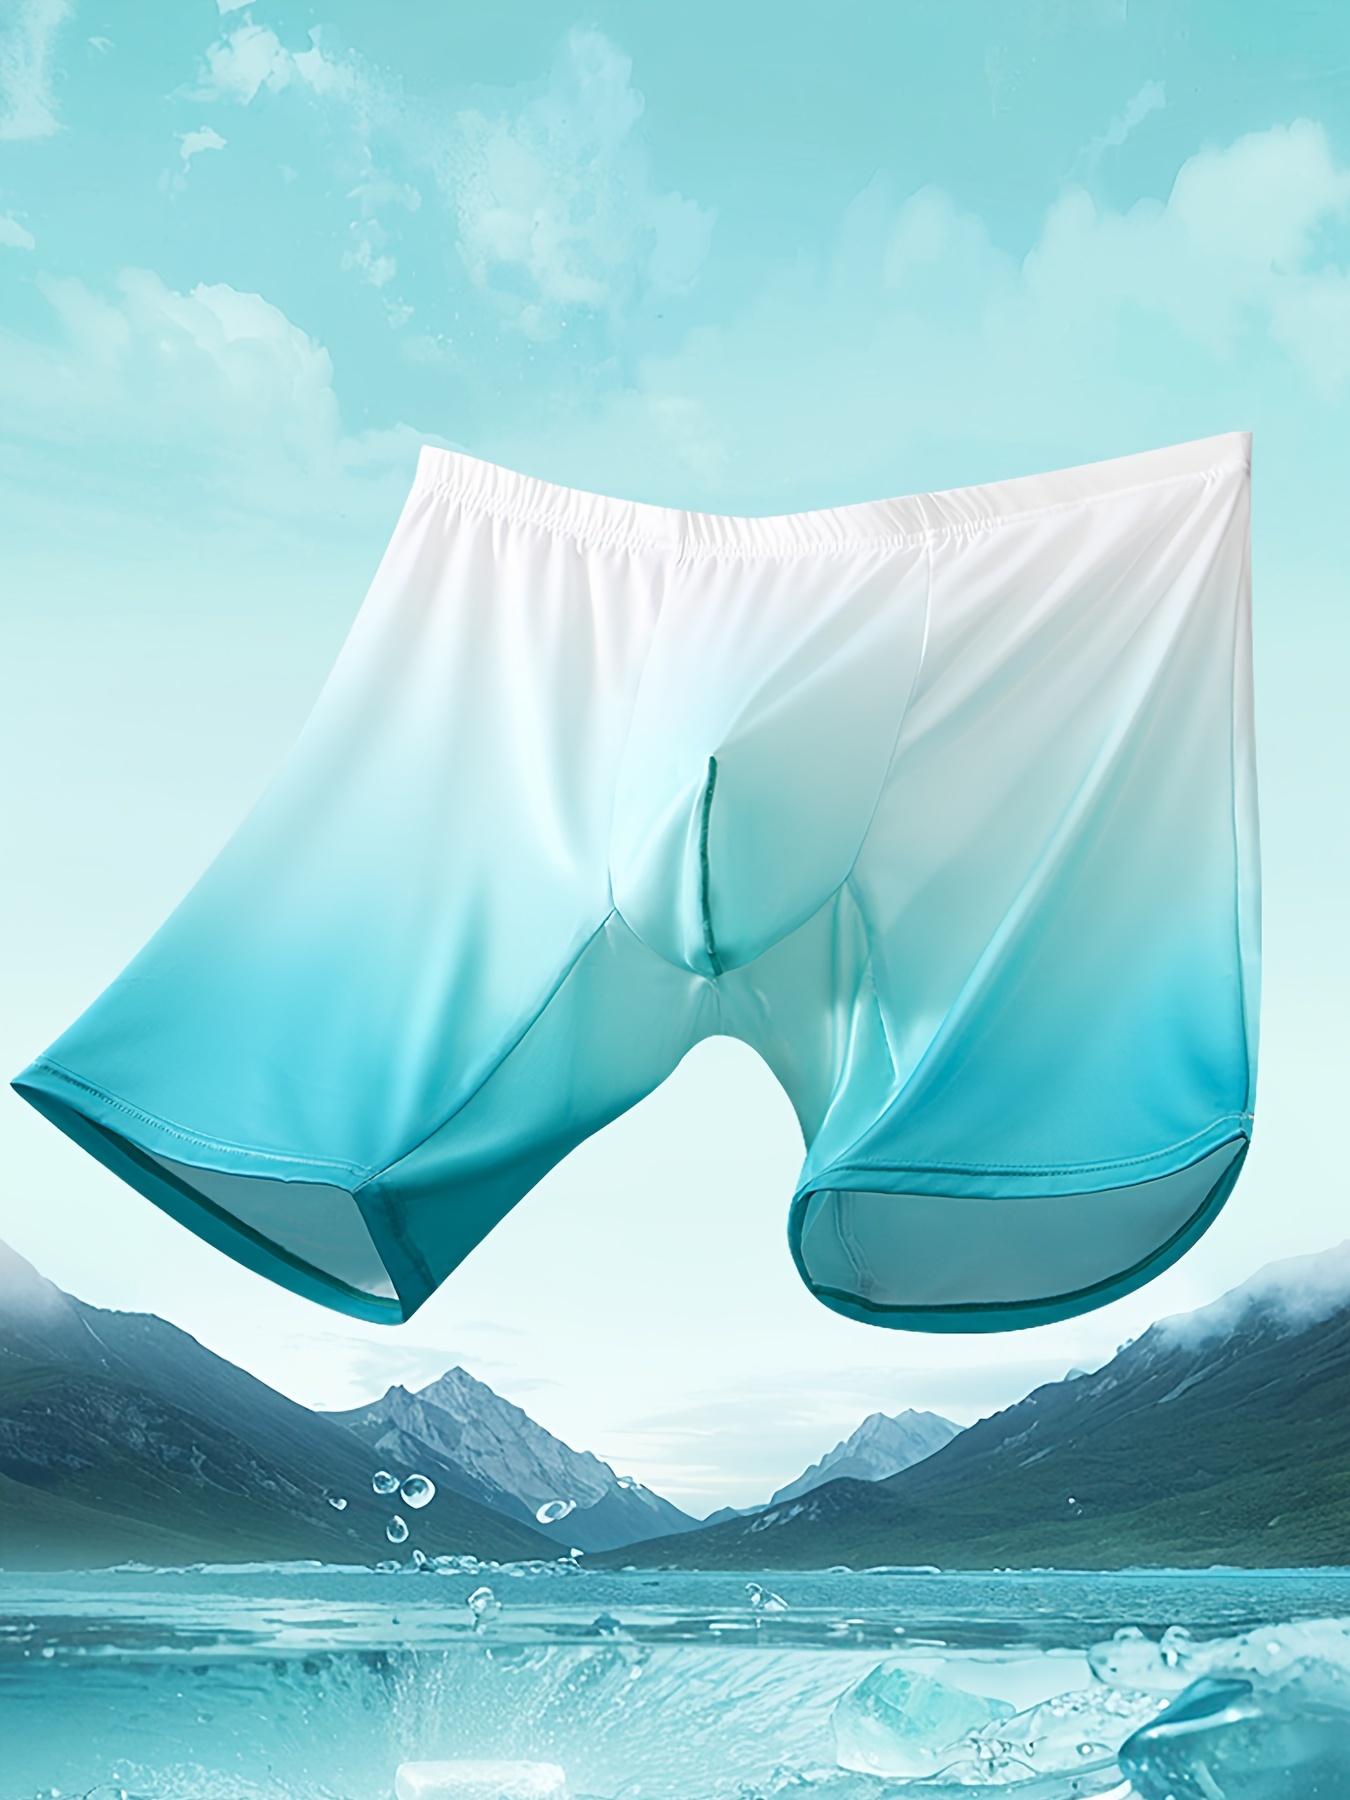 Mesn Ultra-soft Long Boxer Briefs Underwear Breathable U-convex